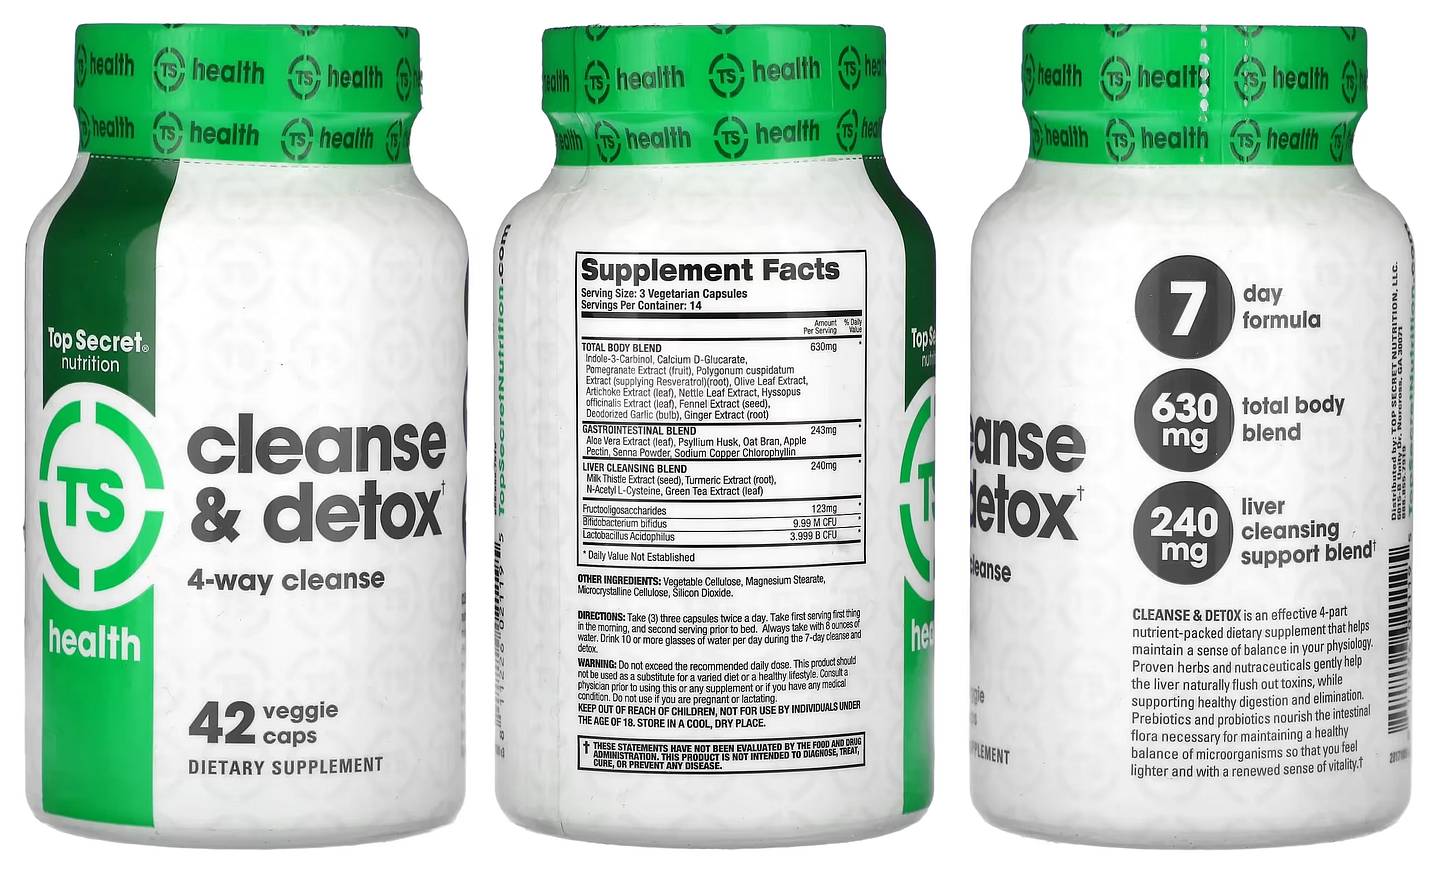 Top Secret Nutrition, Health, Cleanse & Detox packaging